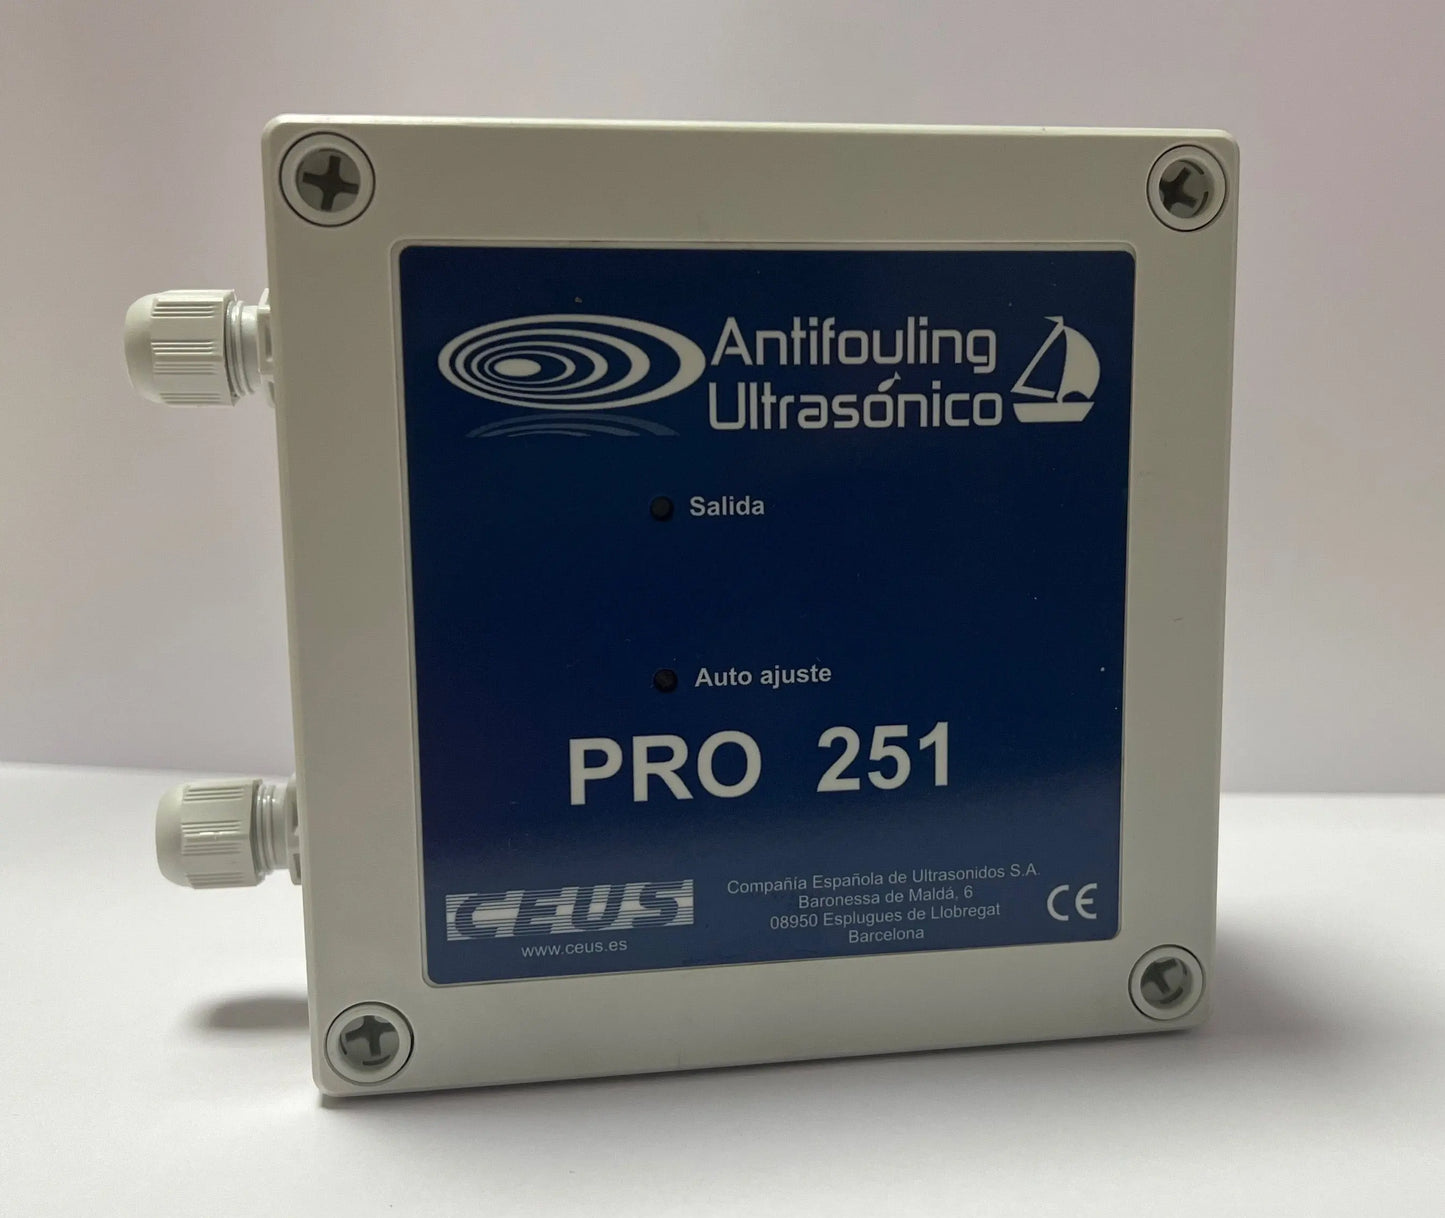 PRO 251 Antifoluling Ultrasónico